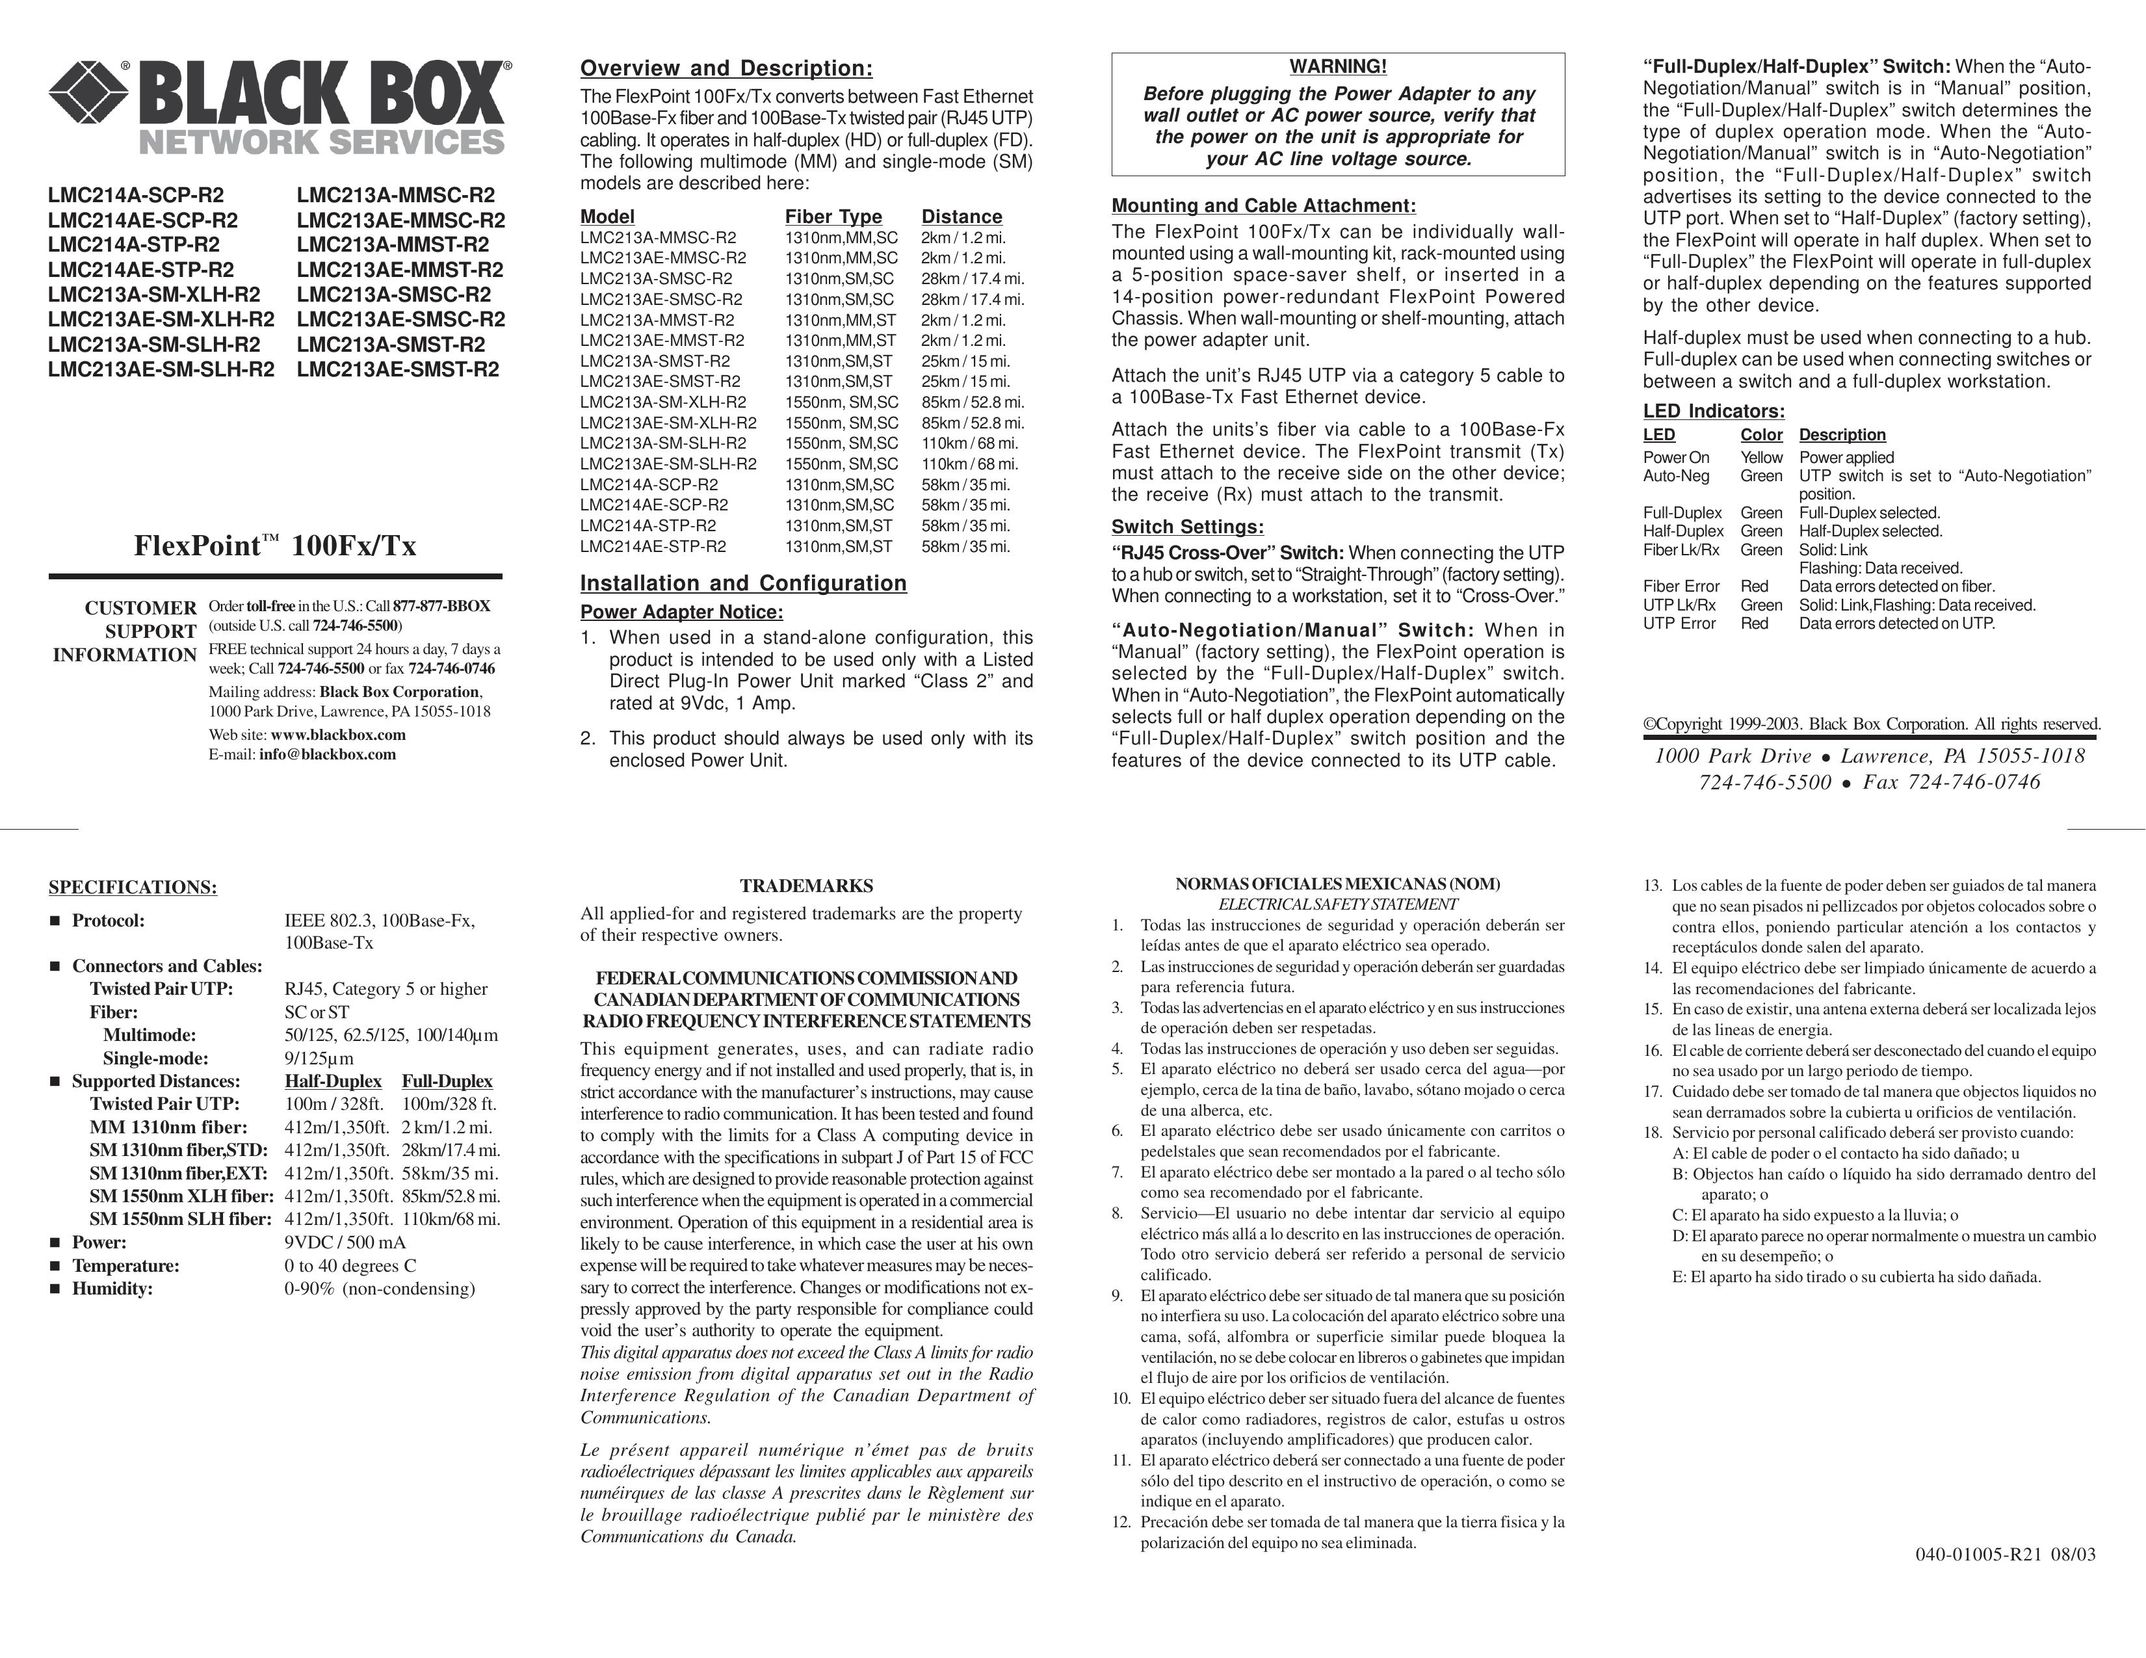 Black Box LMC213A-MMST-R2 Power Supply User Manual